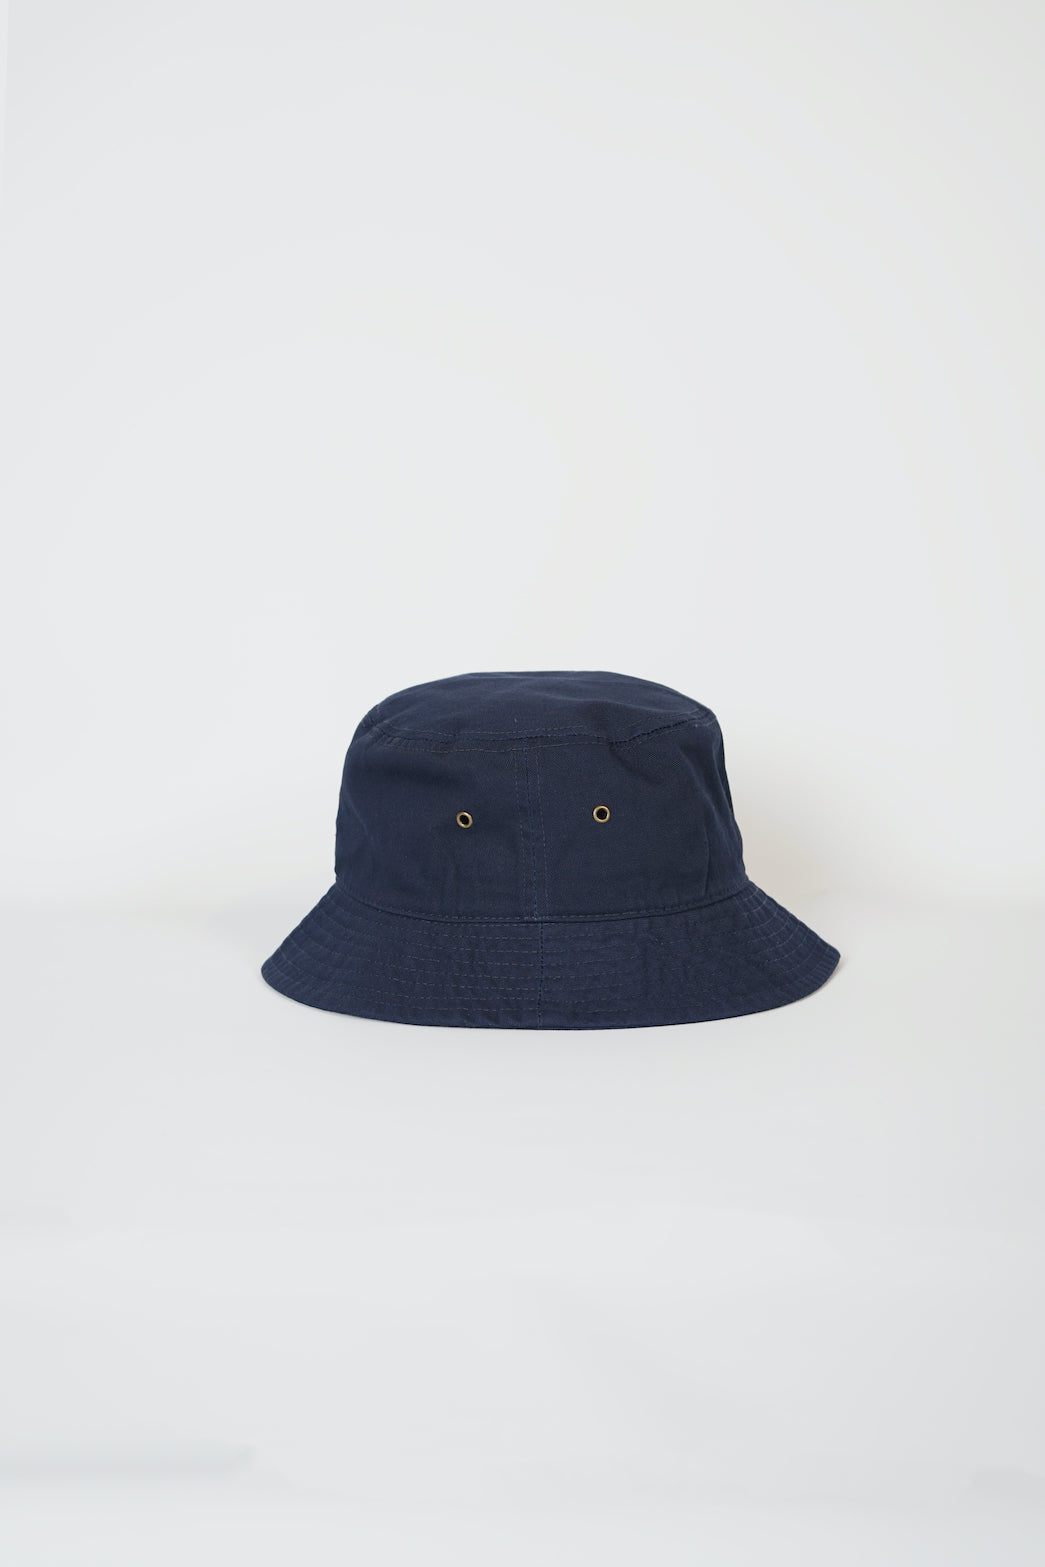 Cotton Bucket Hat Navy